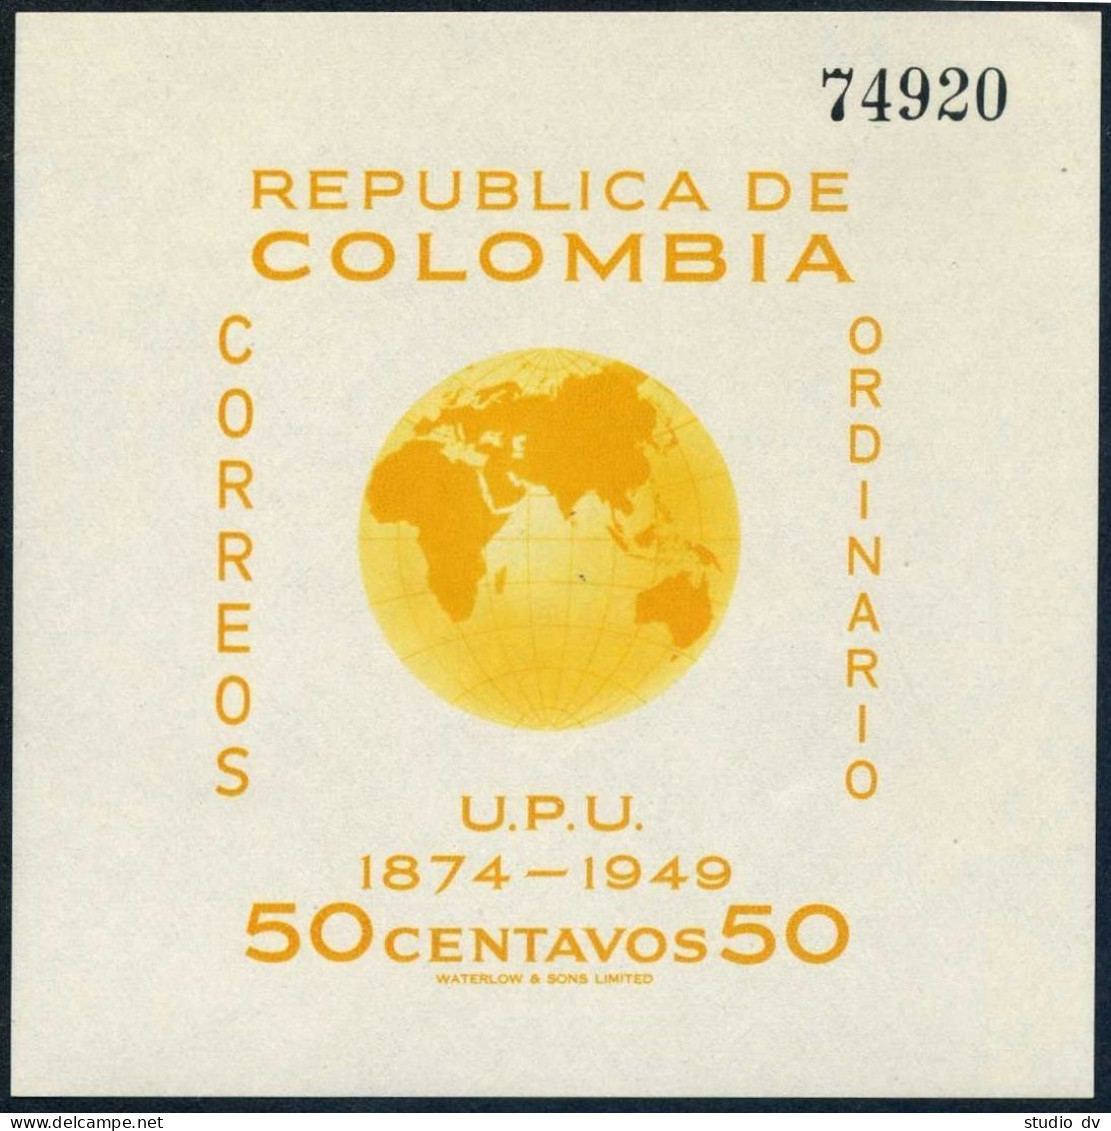 Colombia 580-586, 587, C199, MNH. UPU-75, 1949. Flowers, Post Office, Globe. - Kolumbien